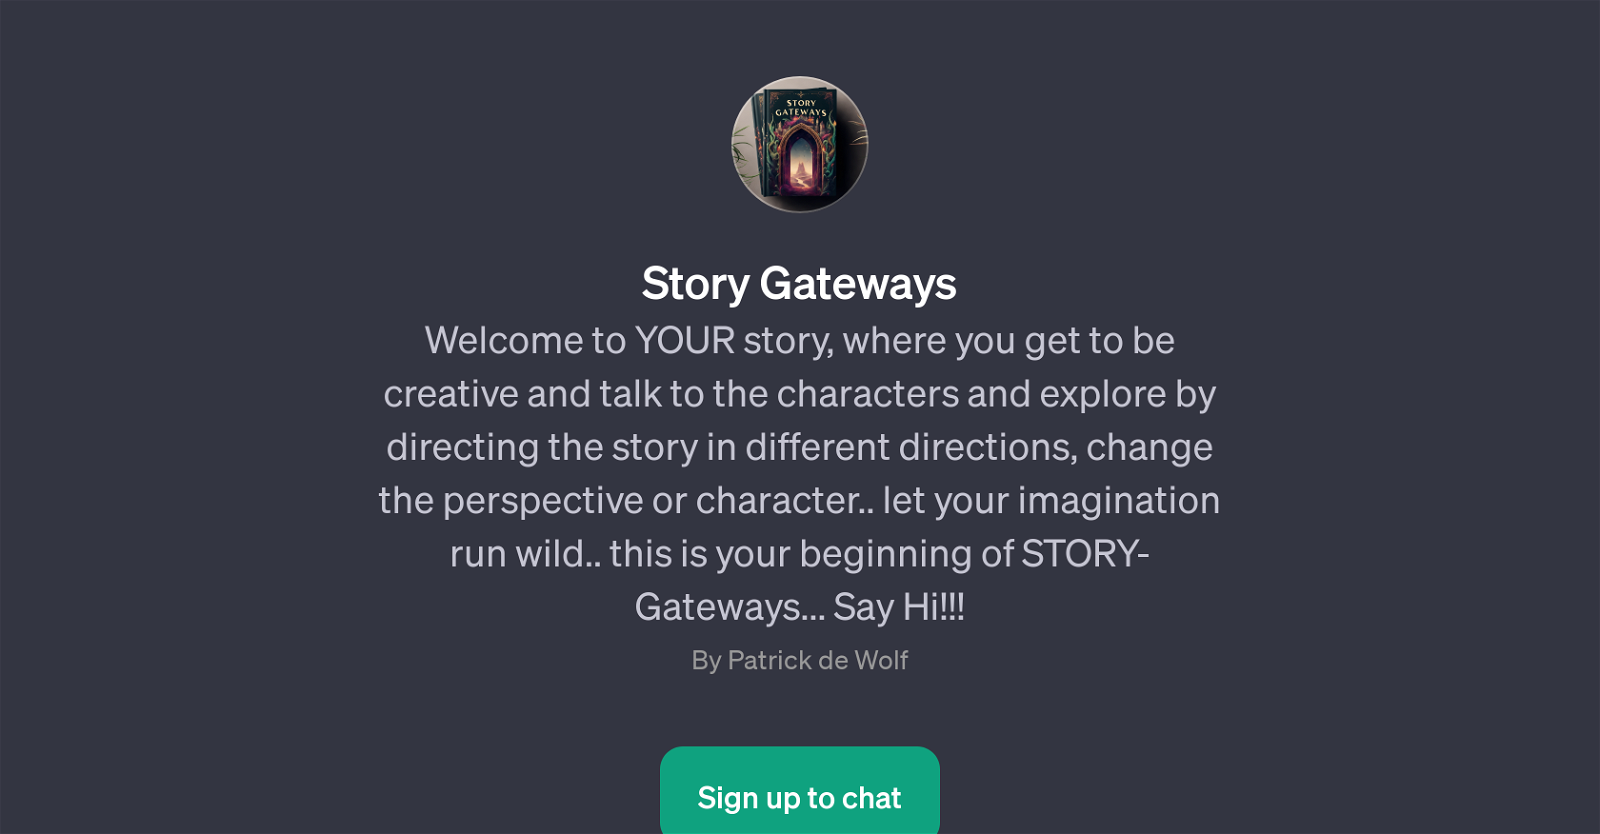 Story Gateways website